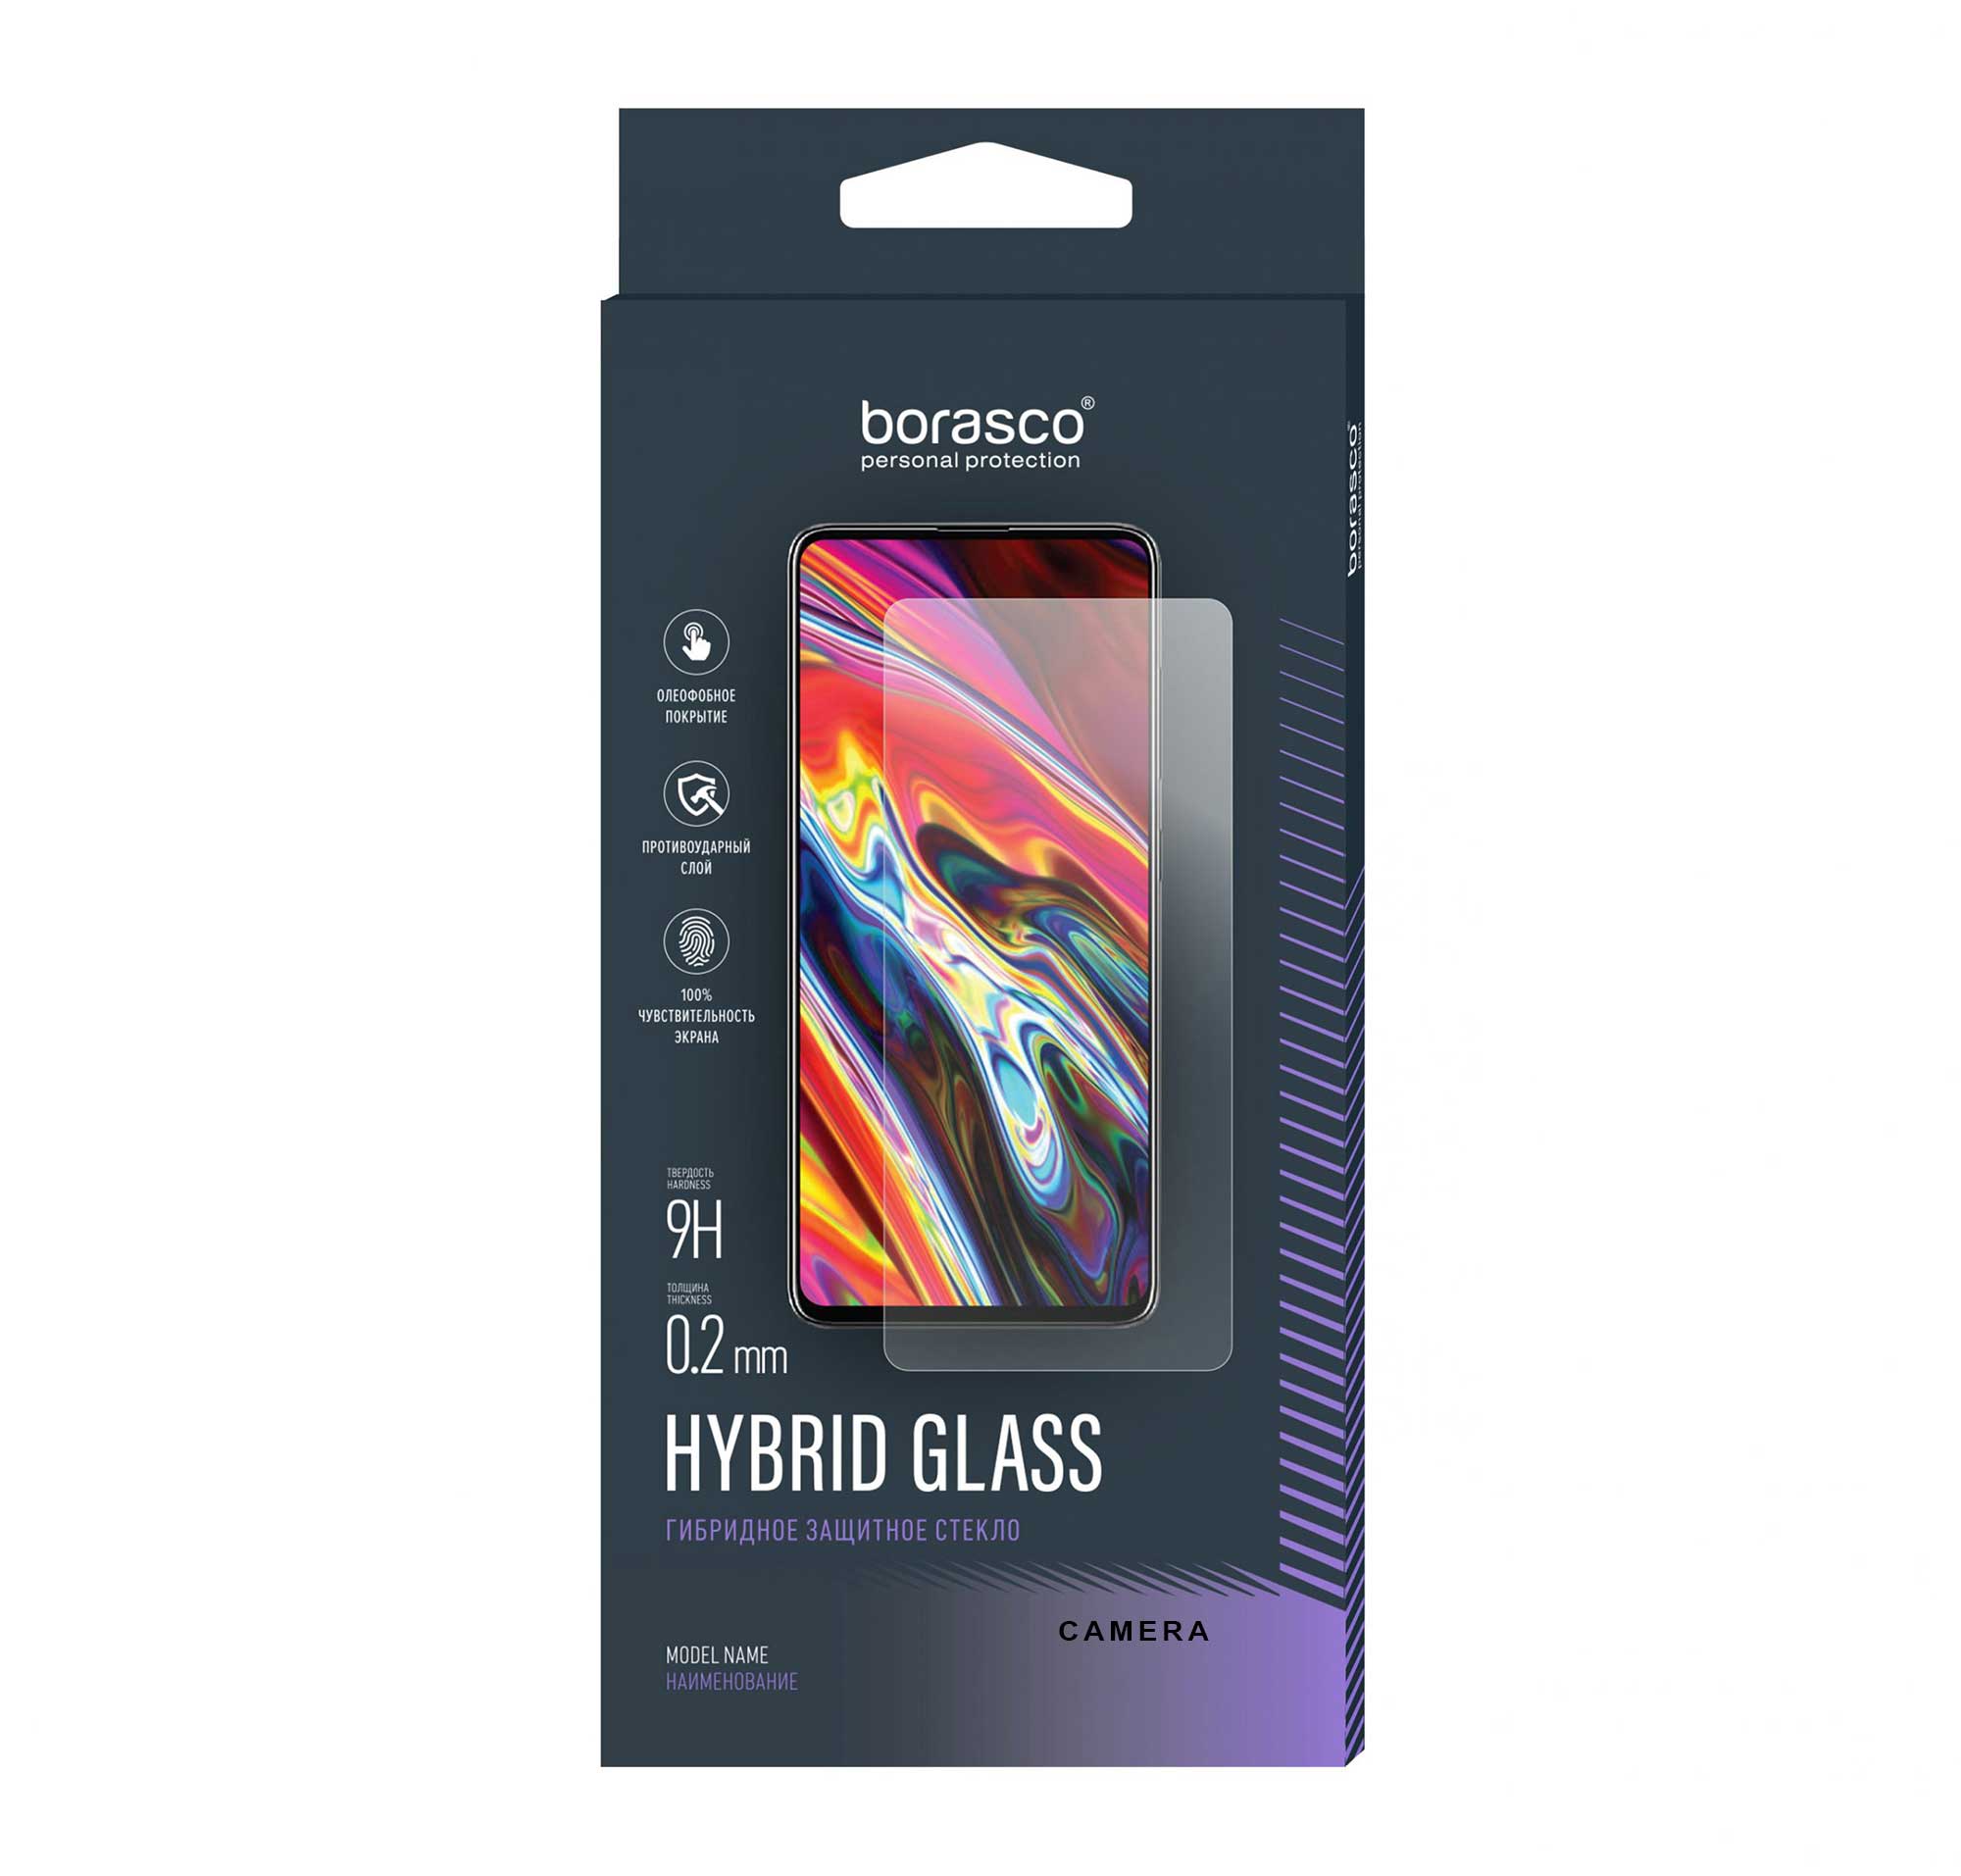 Защитное стекло (Экран+Камера) BoraSCO Hybrid Glass для ITEL Vision 1 Pro защитное стекло borasco 0 26 mm для itel vision 1 pro